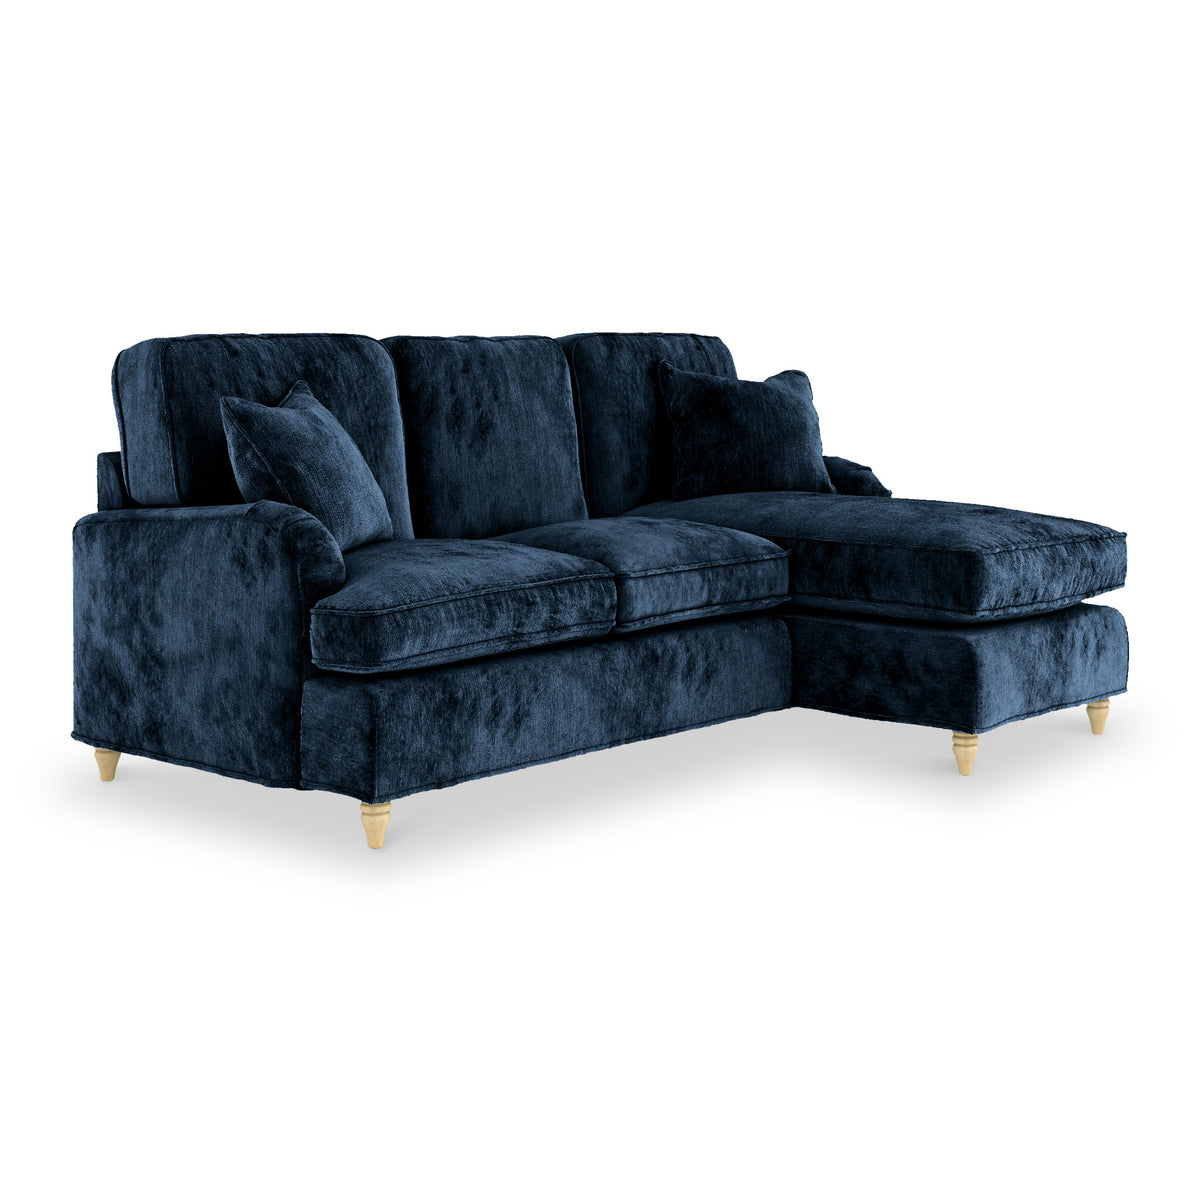 Arthur Navy Blue RH Chaise Sofa from Roseland furniture